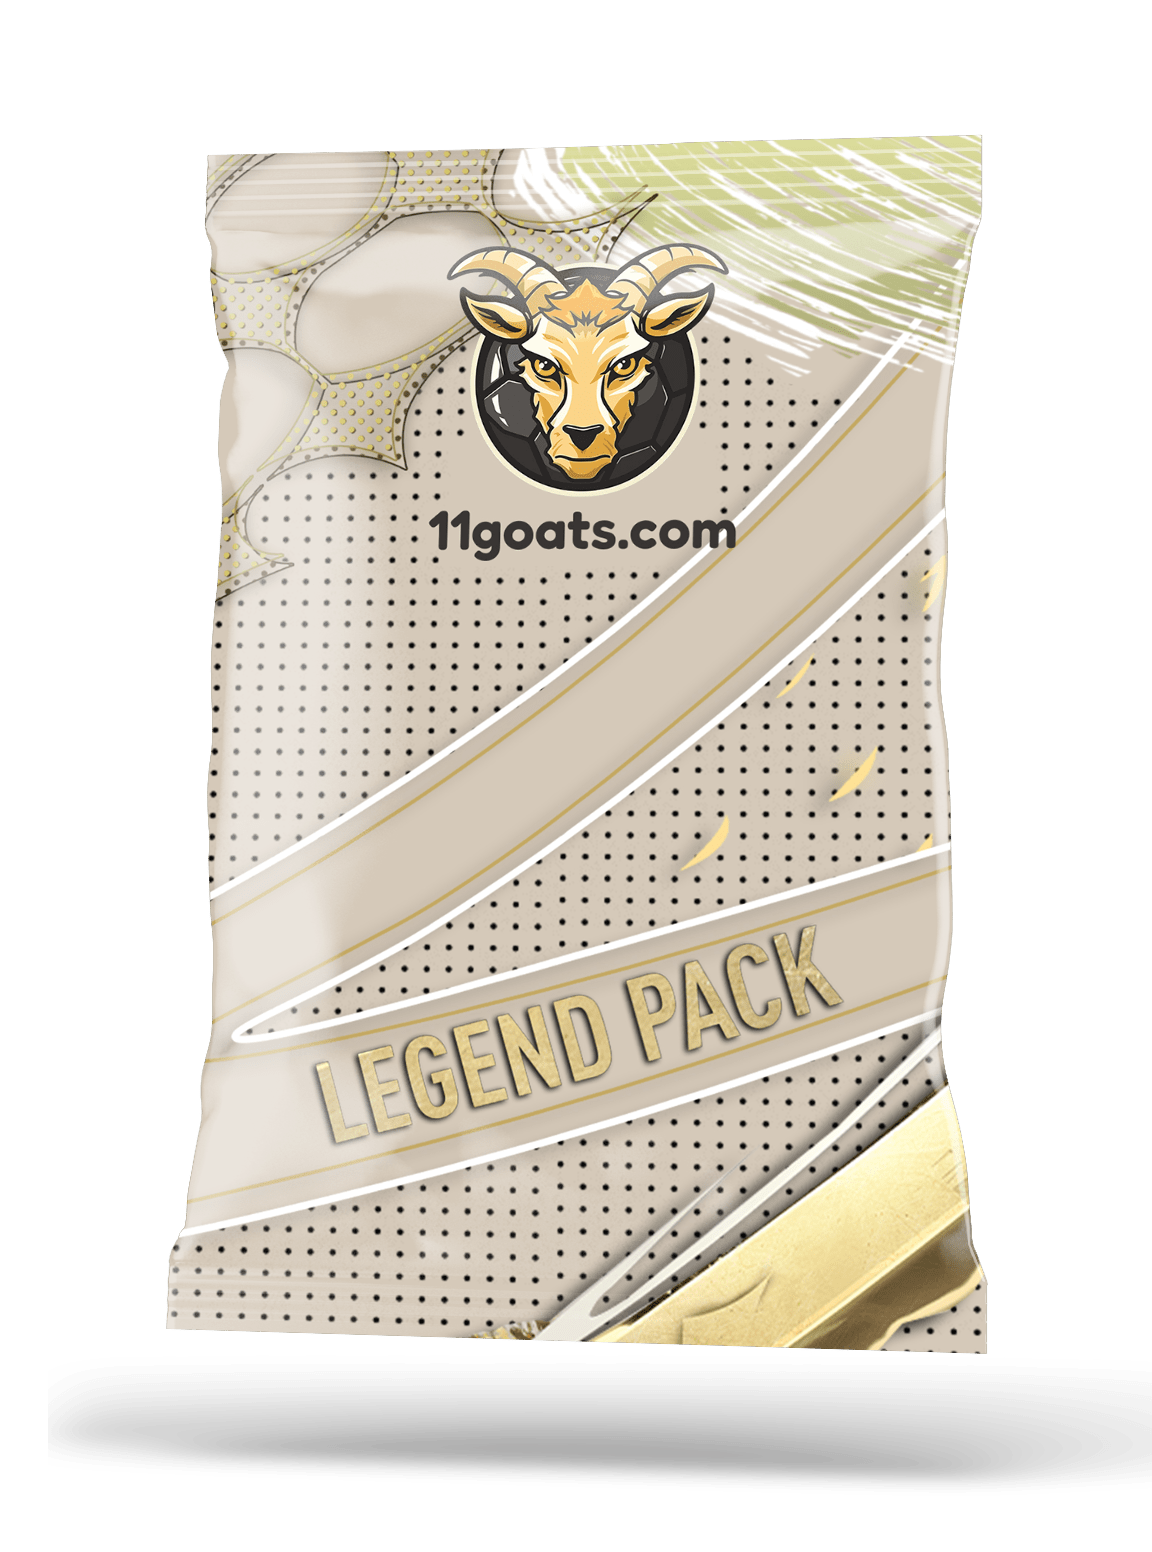 S23 Pack - Legends - 11goats